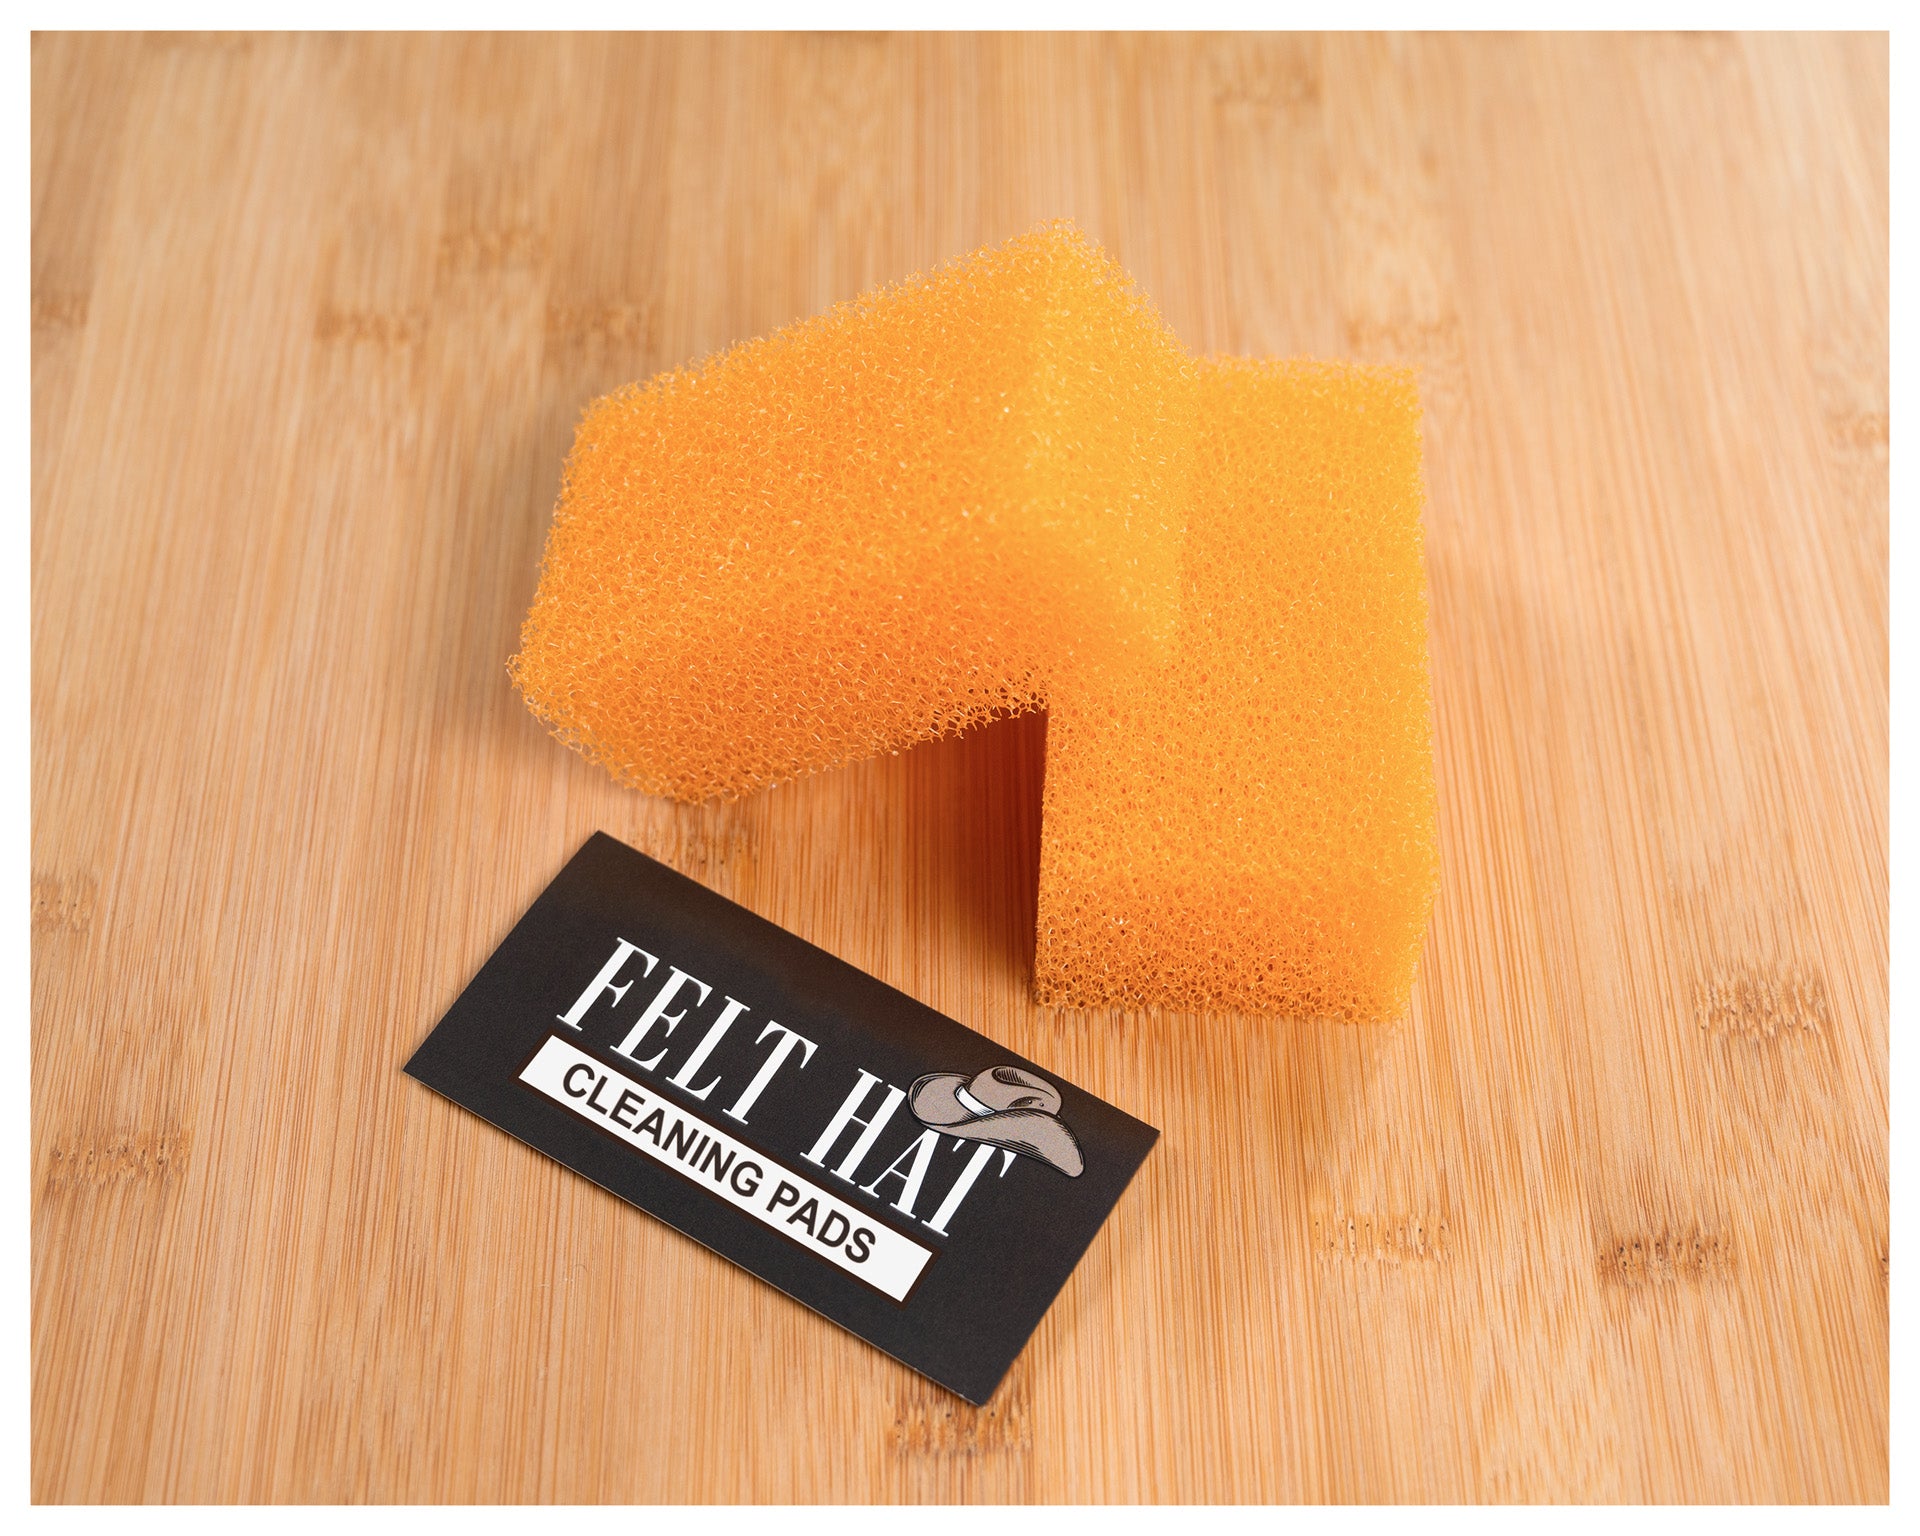 Hat Cleaning Sponges for Felt Hats 01032 – The Branding Iron